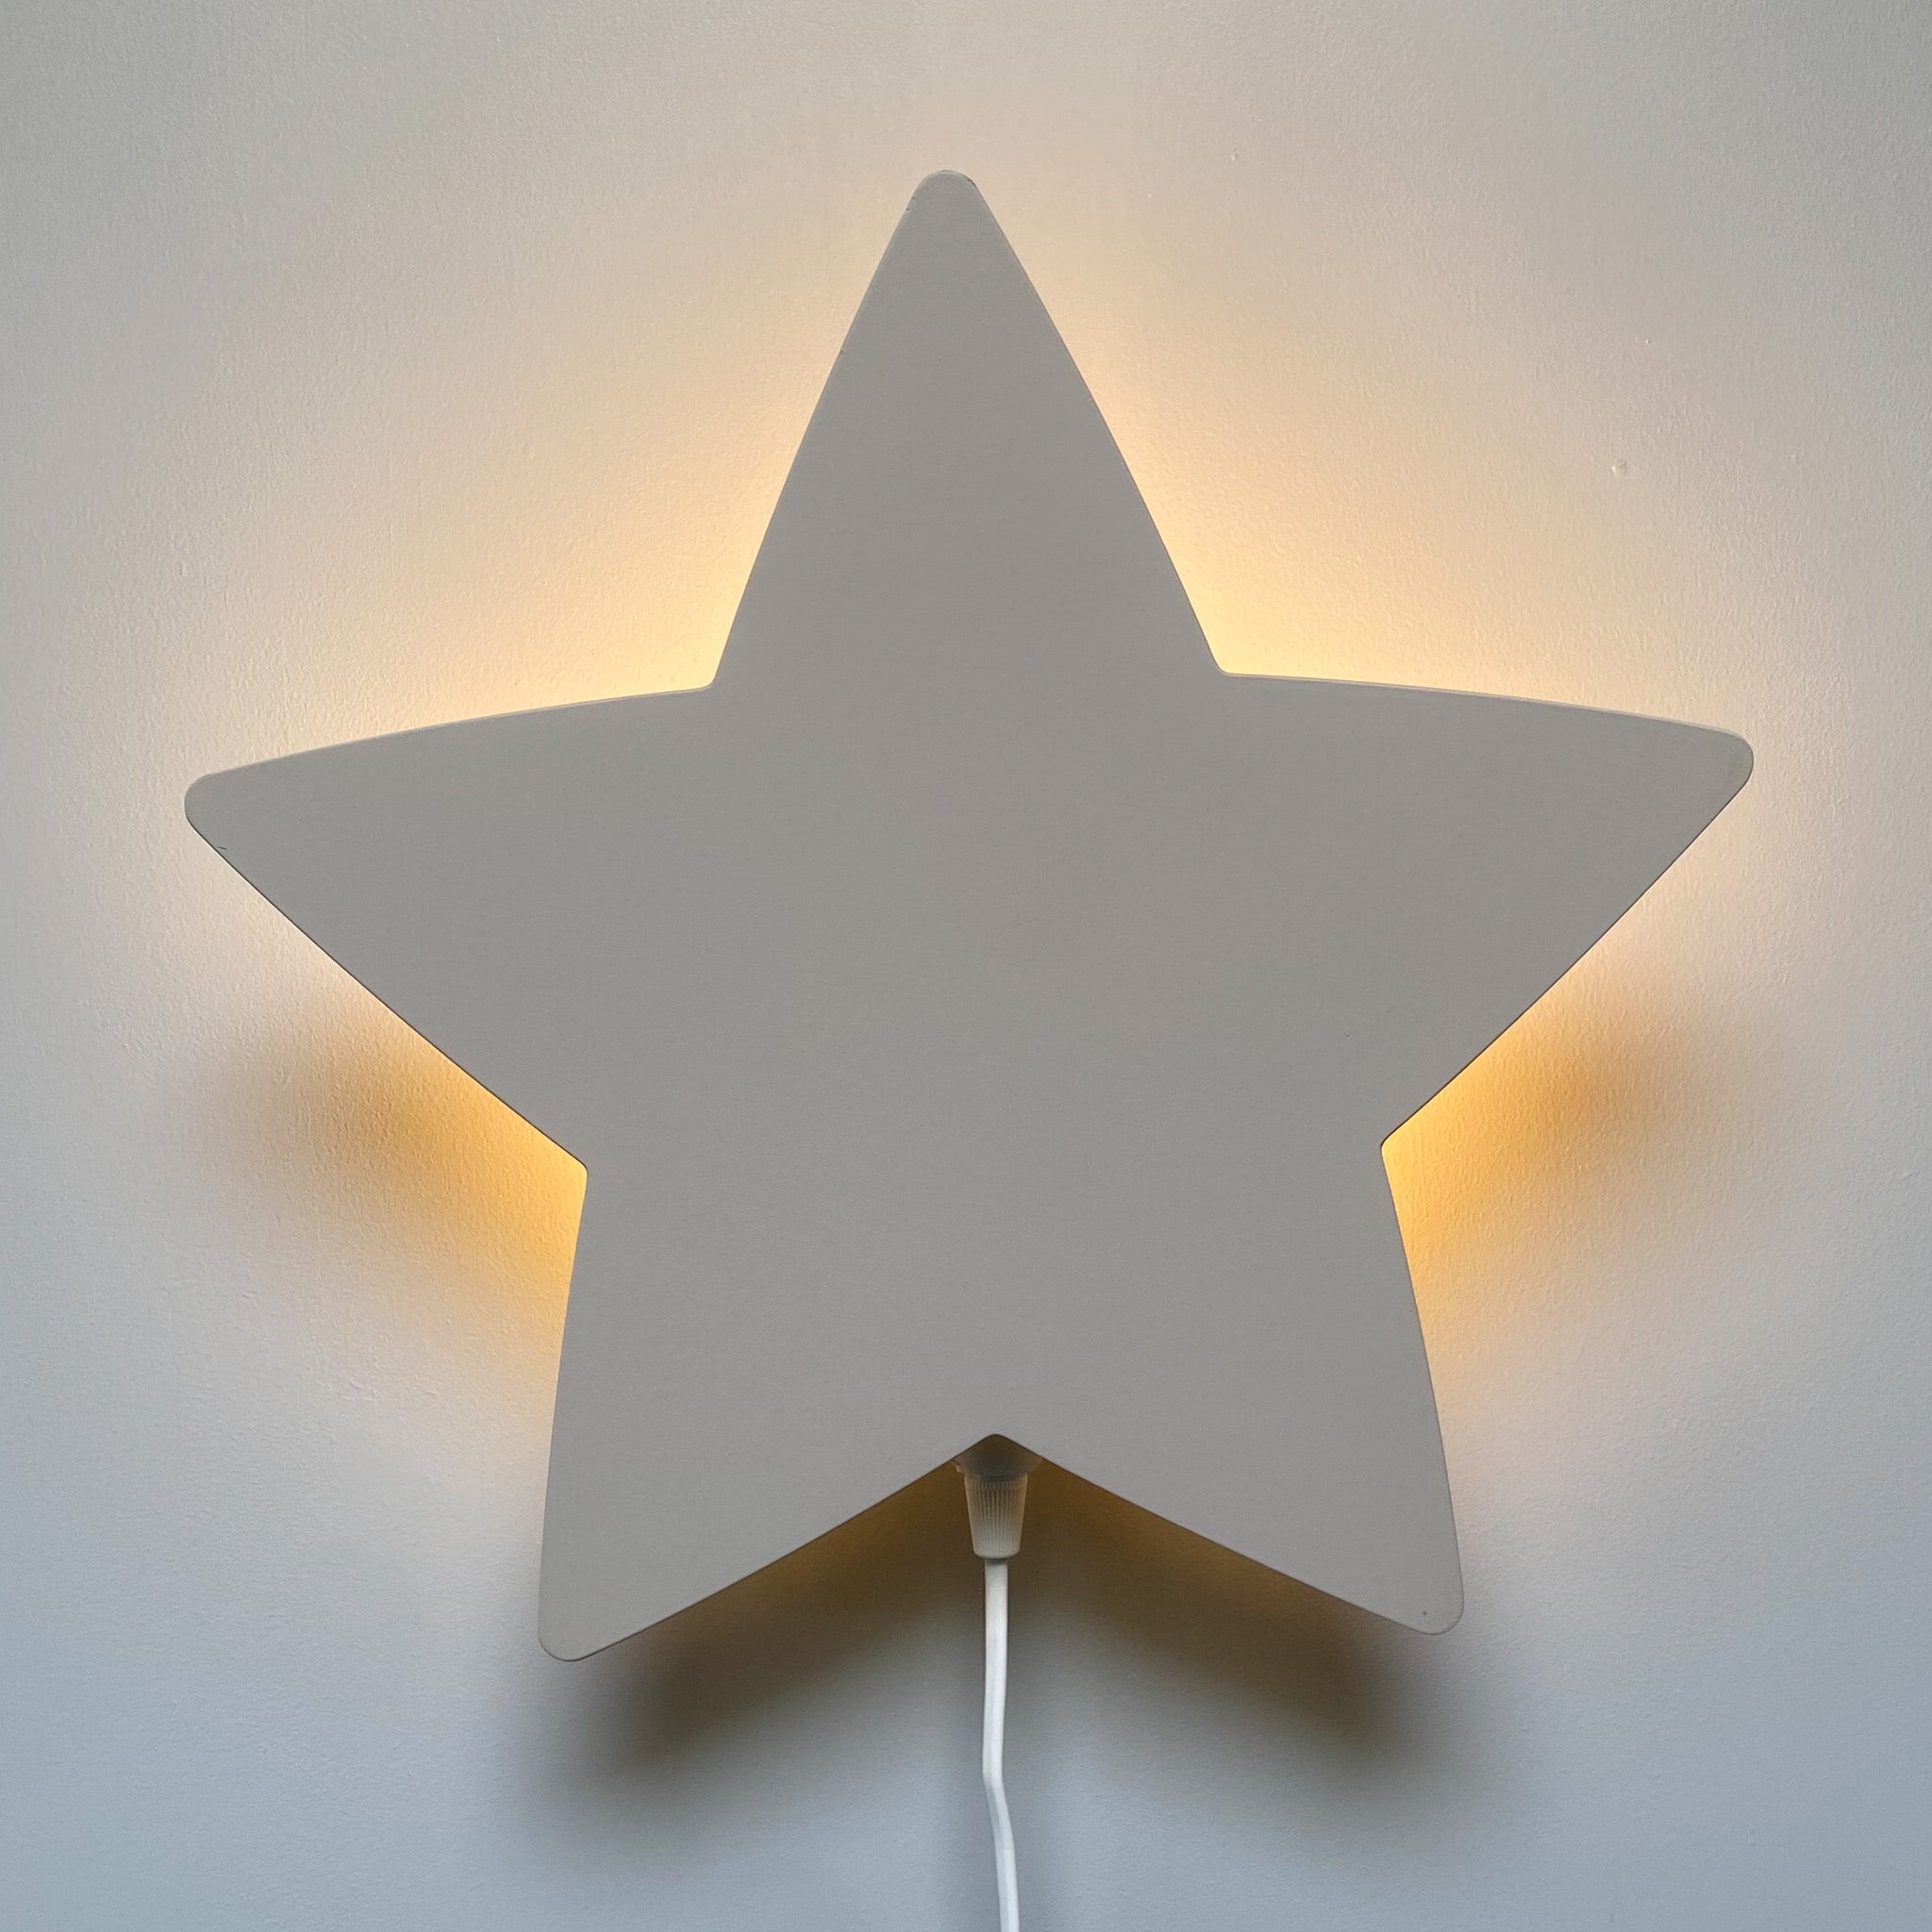 Houten wandlamp kinderkamer | Ster - beige - toddie.fr